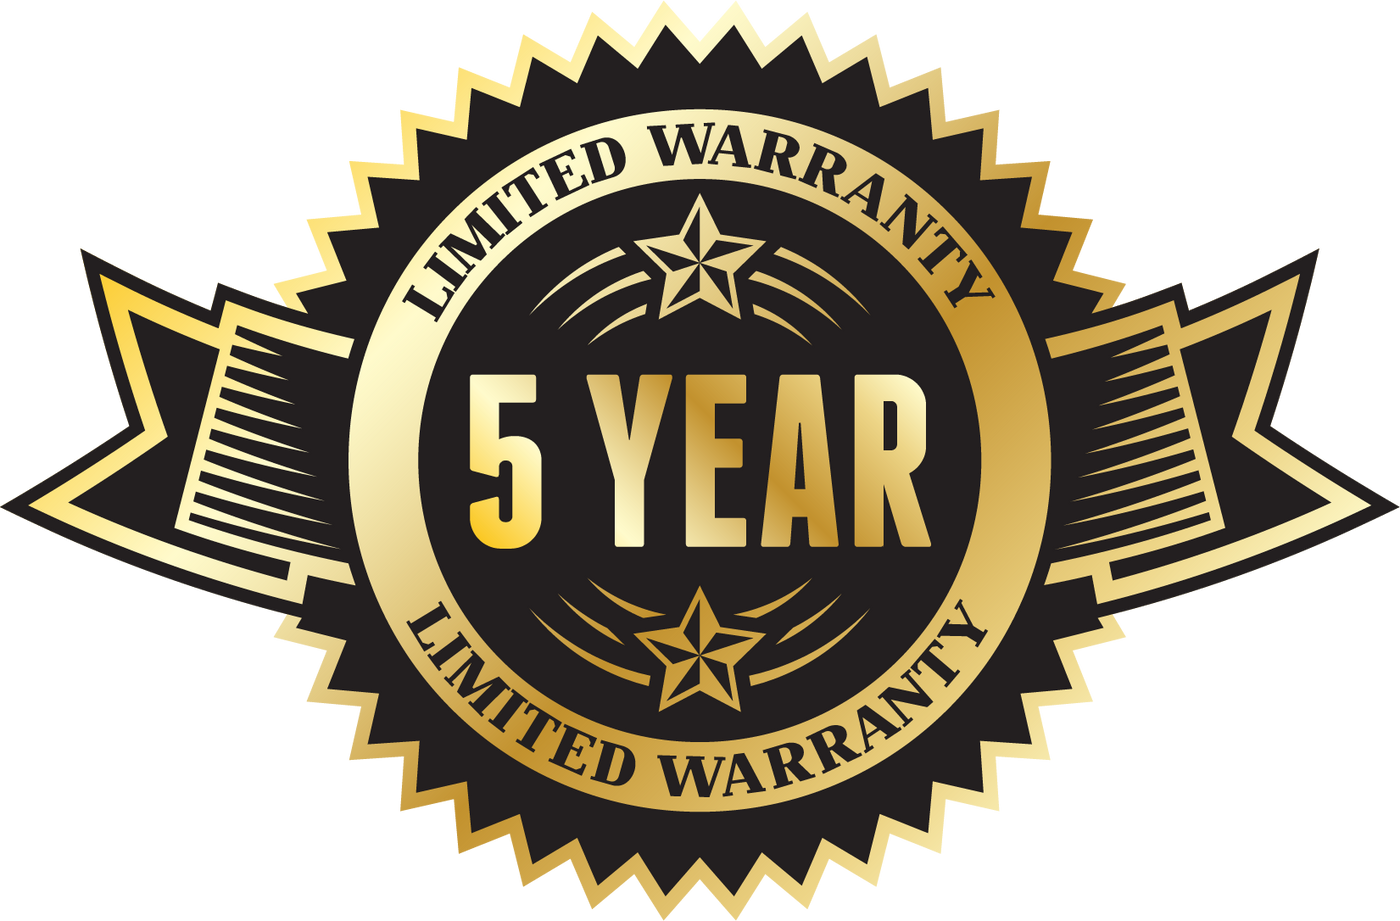 POWERCHUTE® 5 Year Extended Warranty